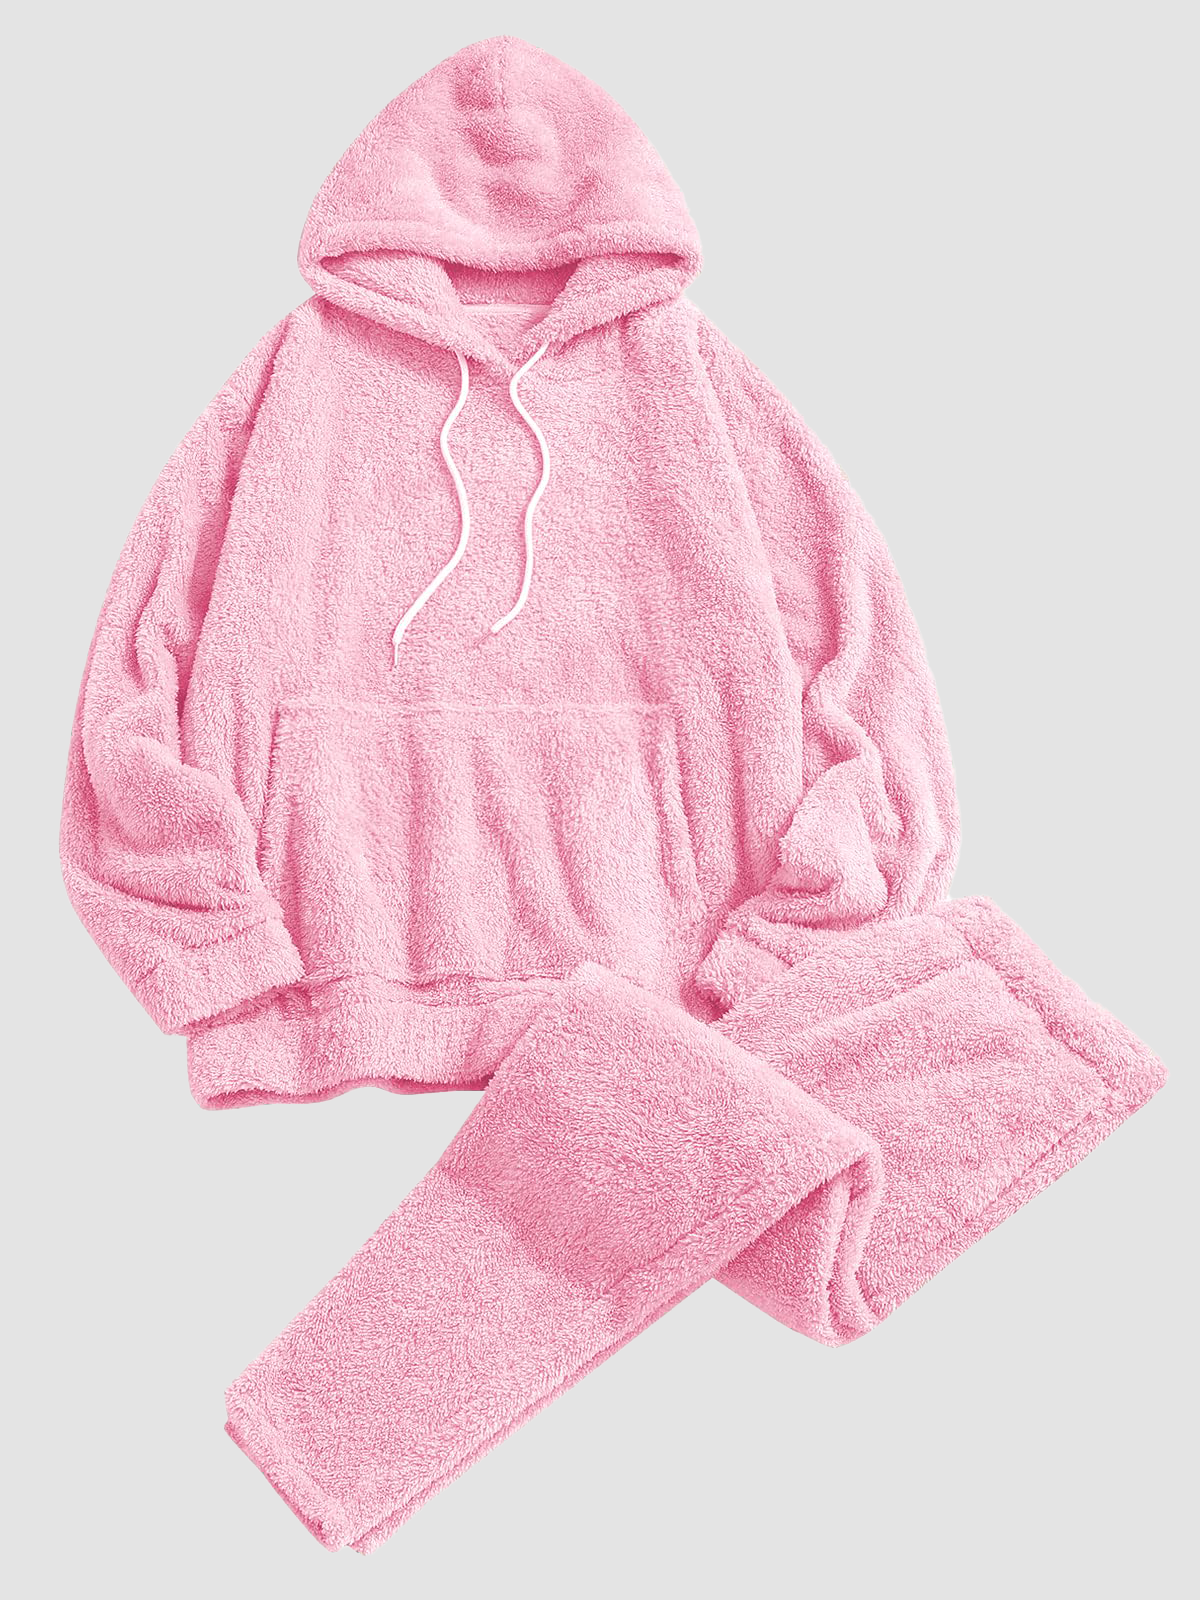 Fuzzy-Fleece-Pajamas-Sets-Pink-2